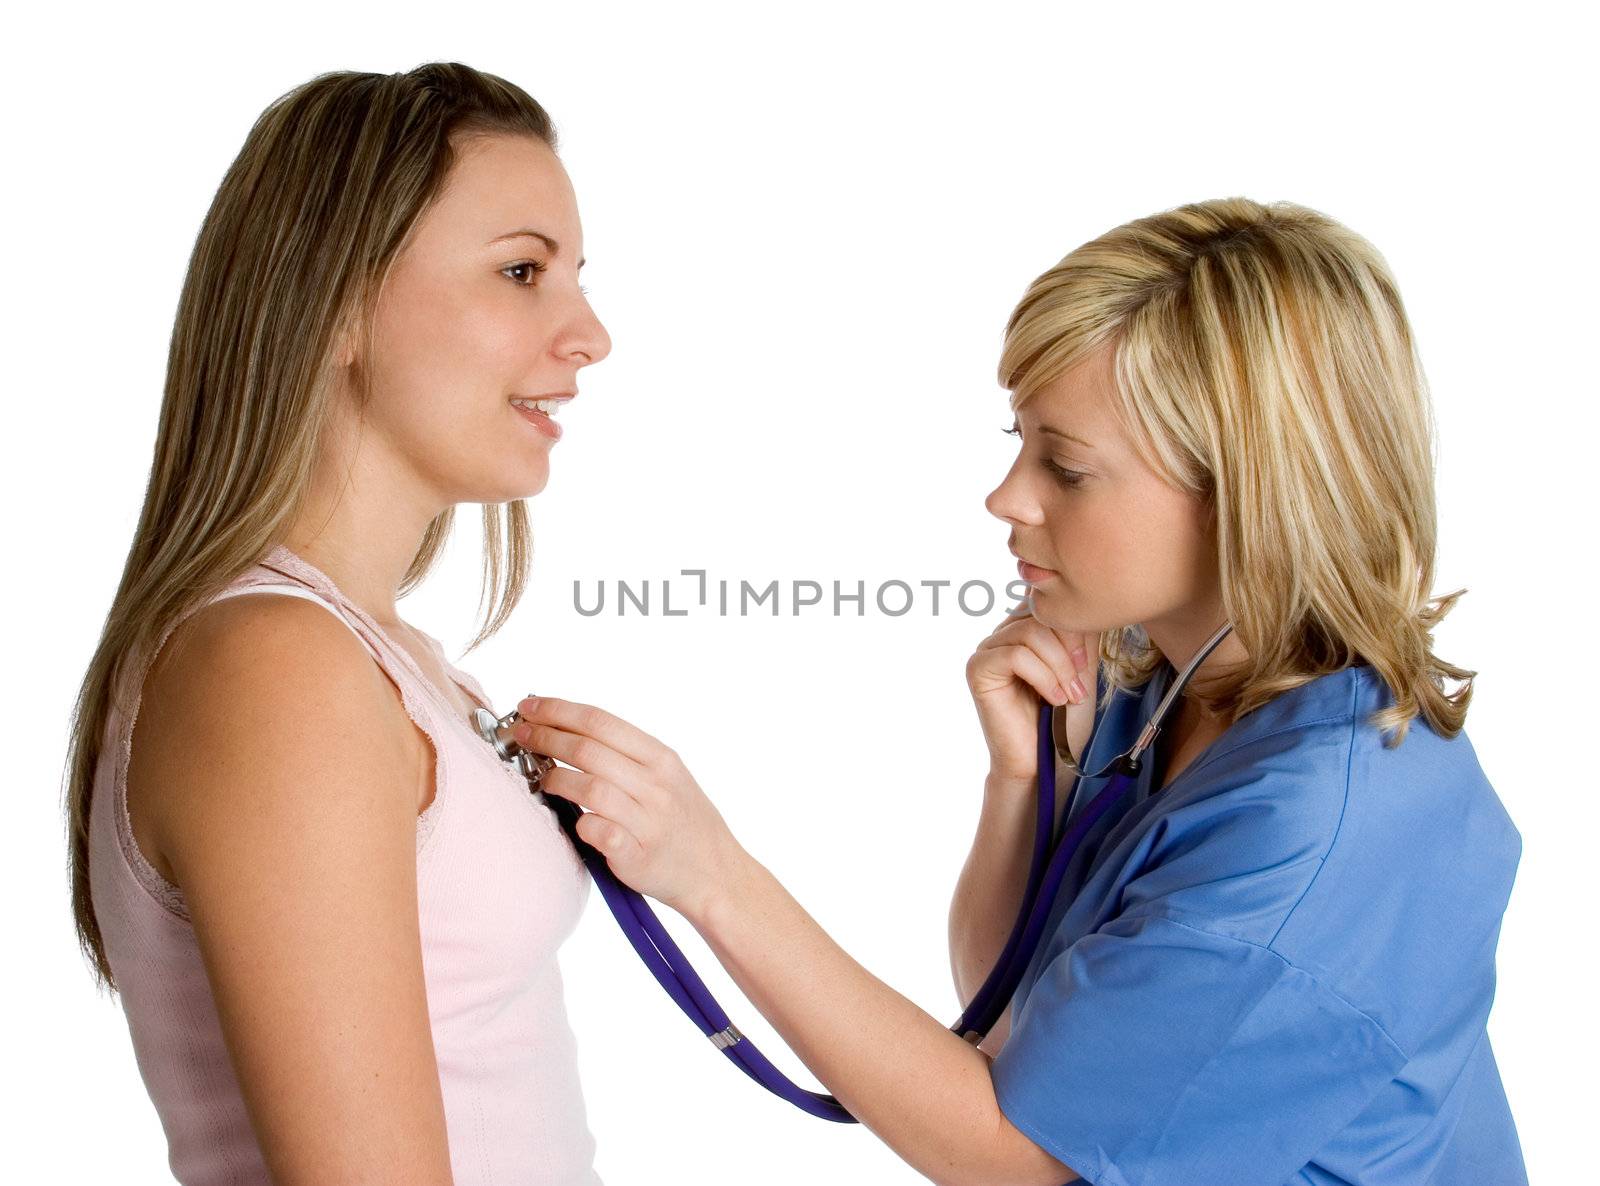 Nurse using stethoscope on patient